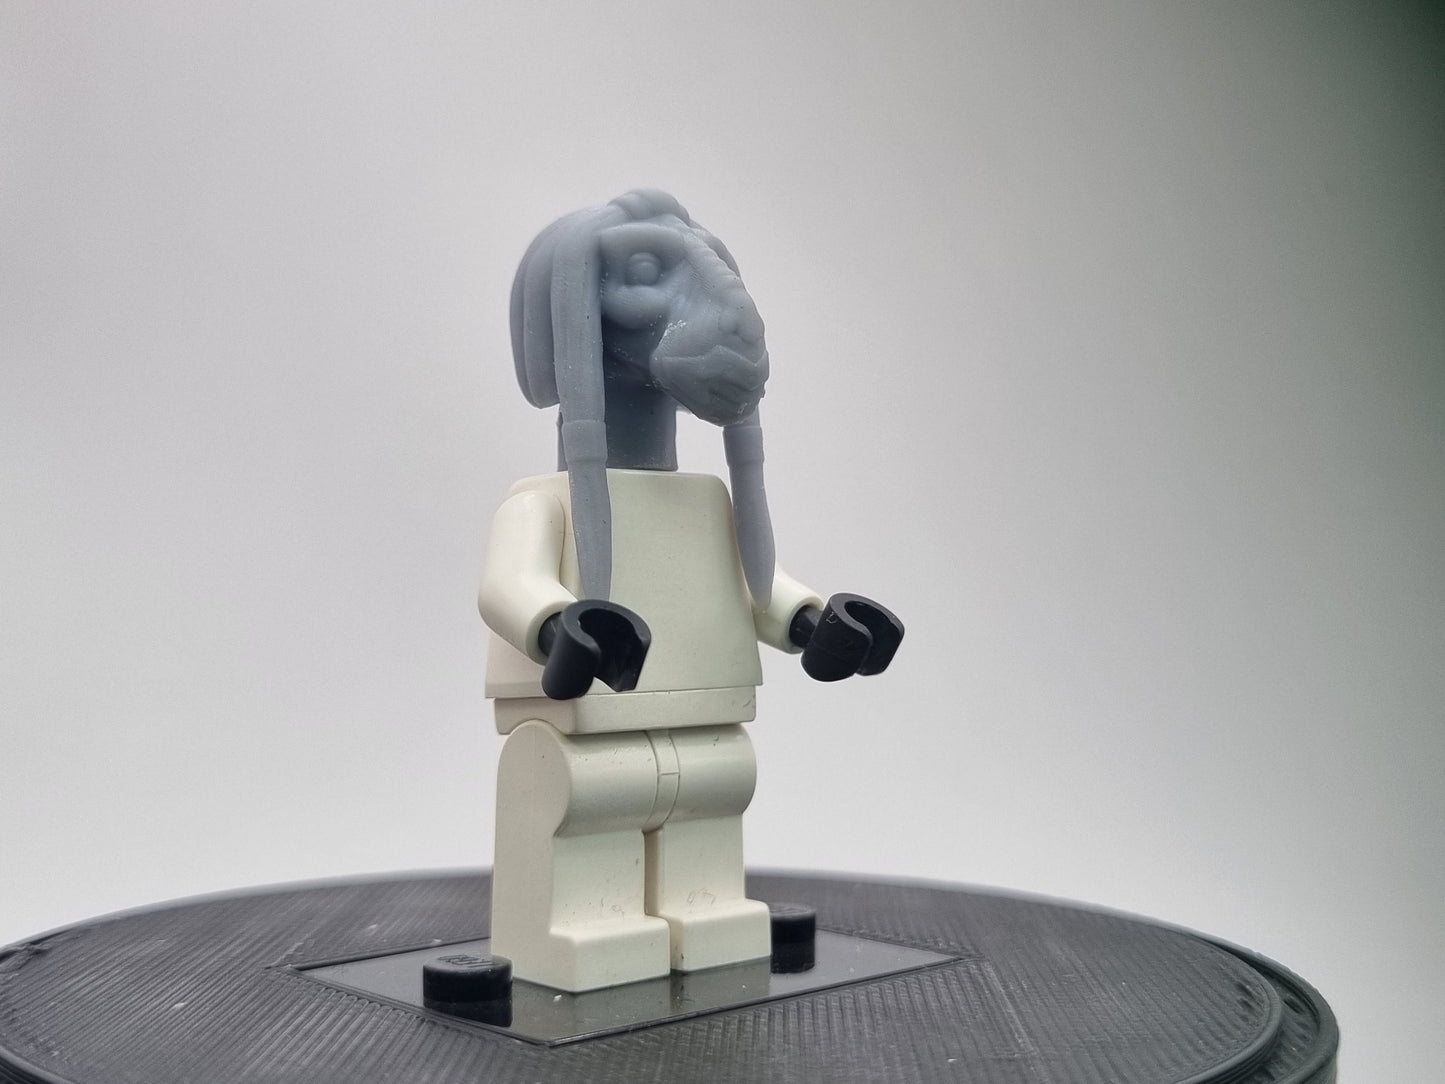 Building toy custom 3D alien with long hair!